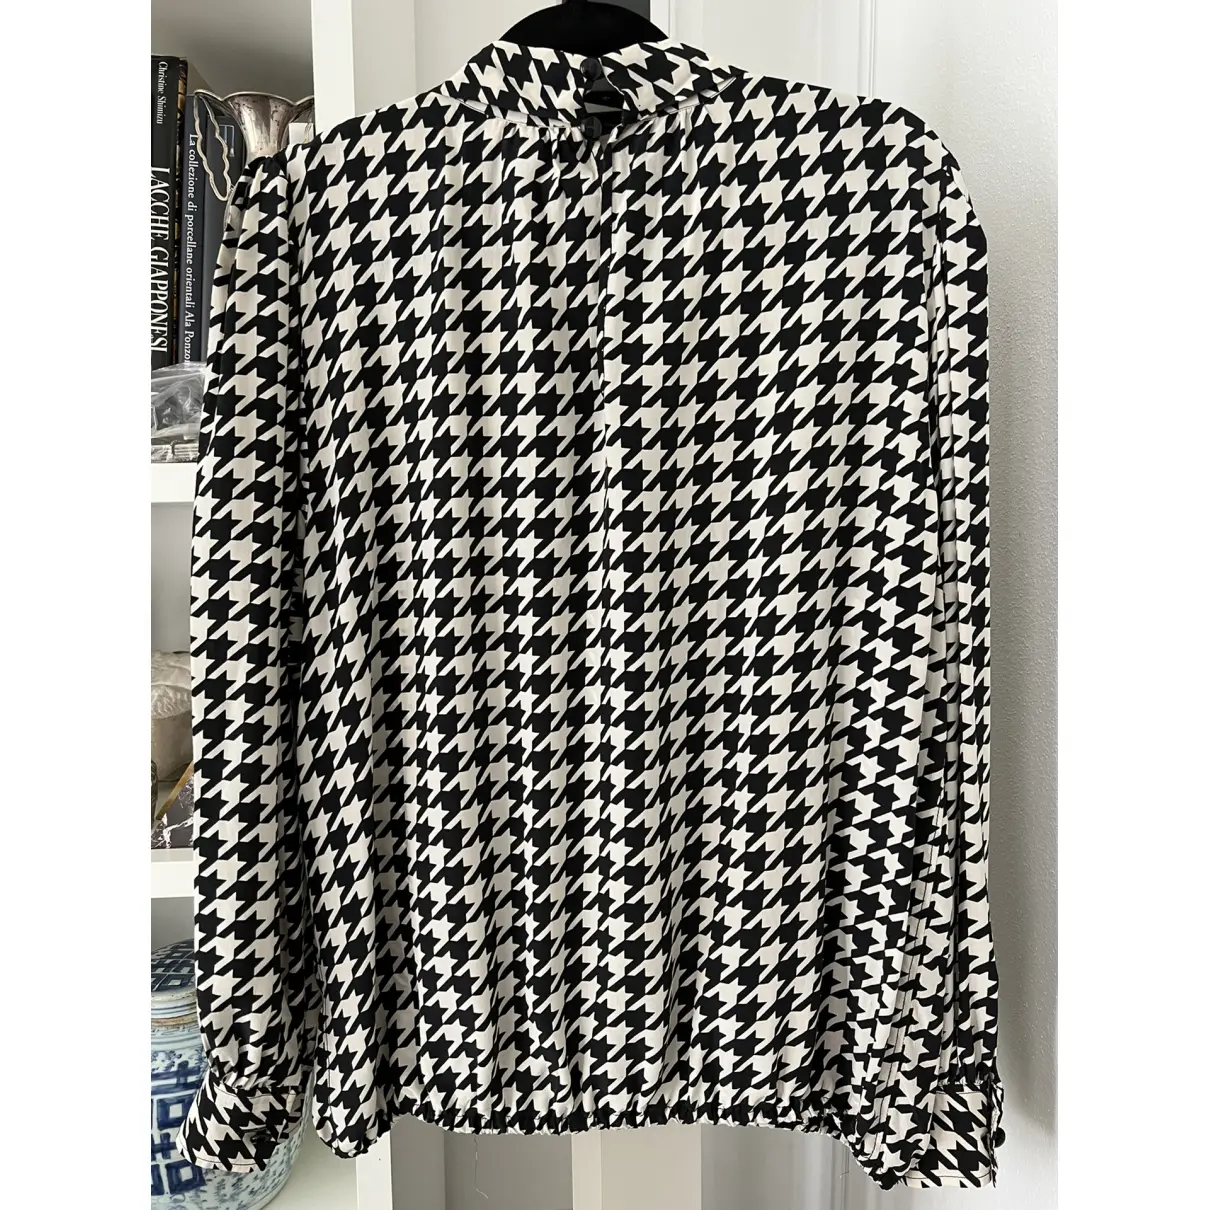 Buy Yves Saint Laurent Silk blouse online - Vintage